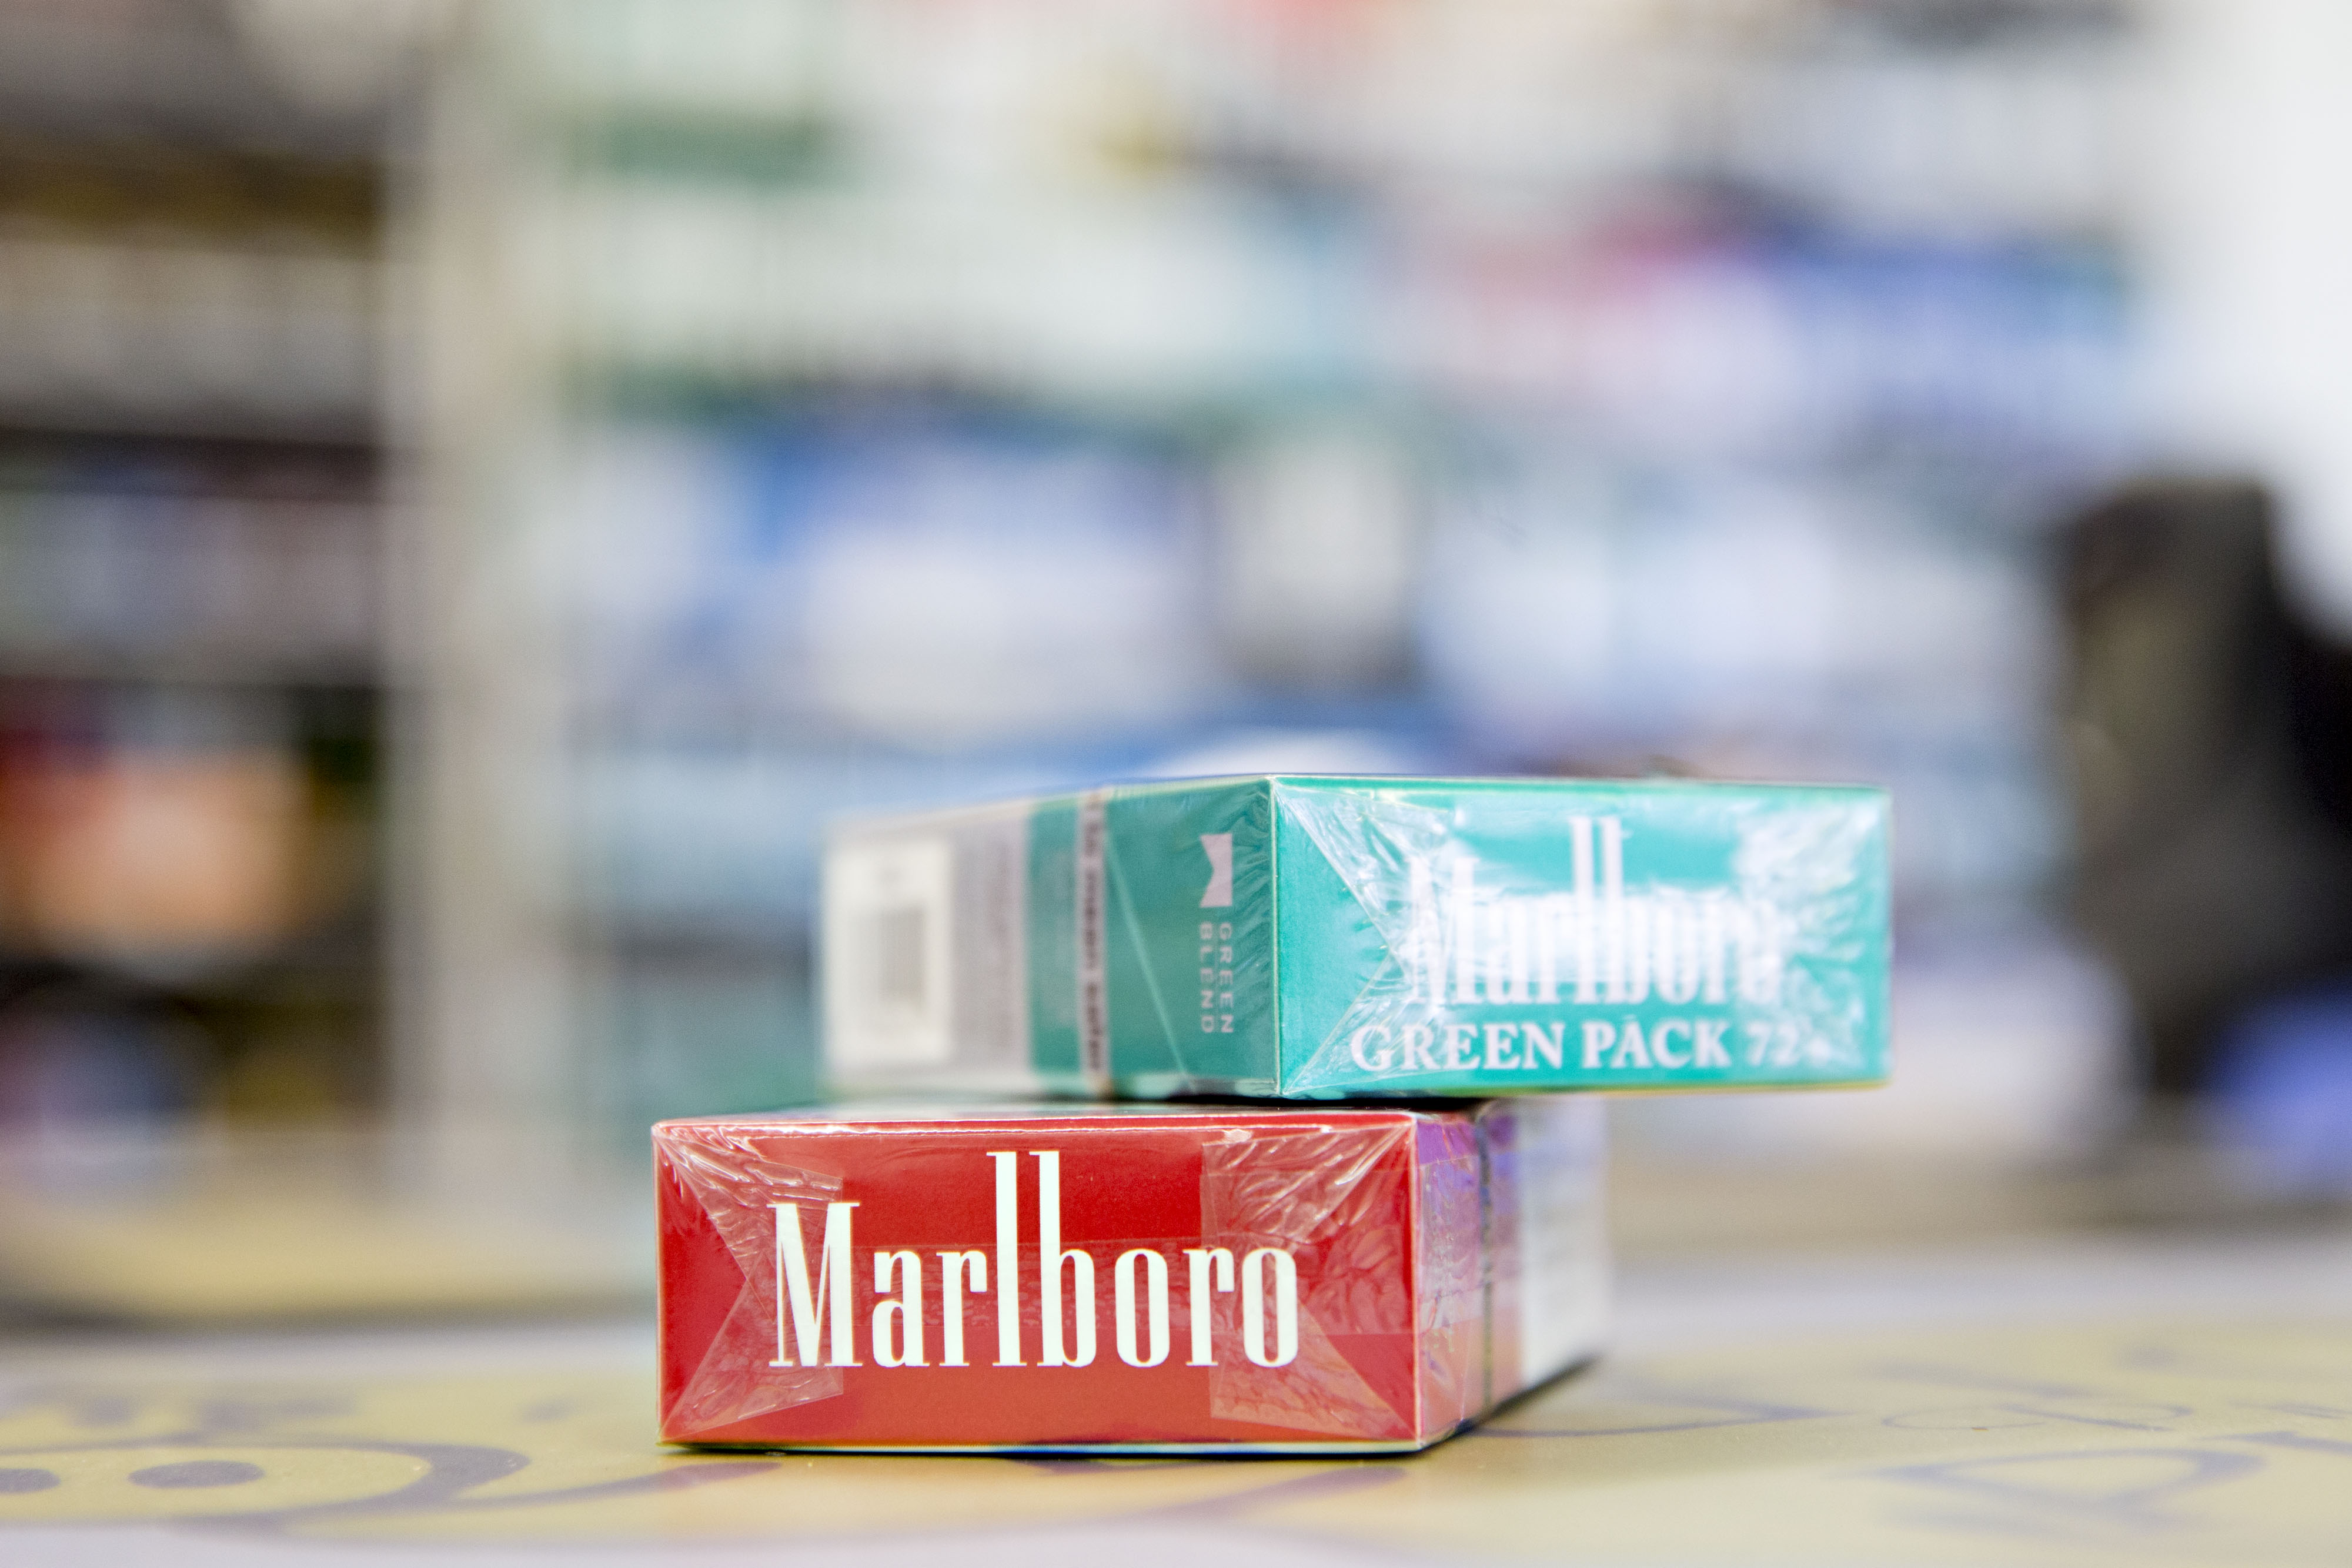 raise-age-buy-tobacco